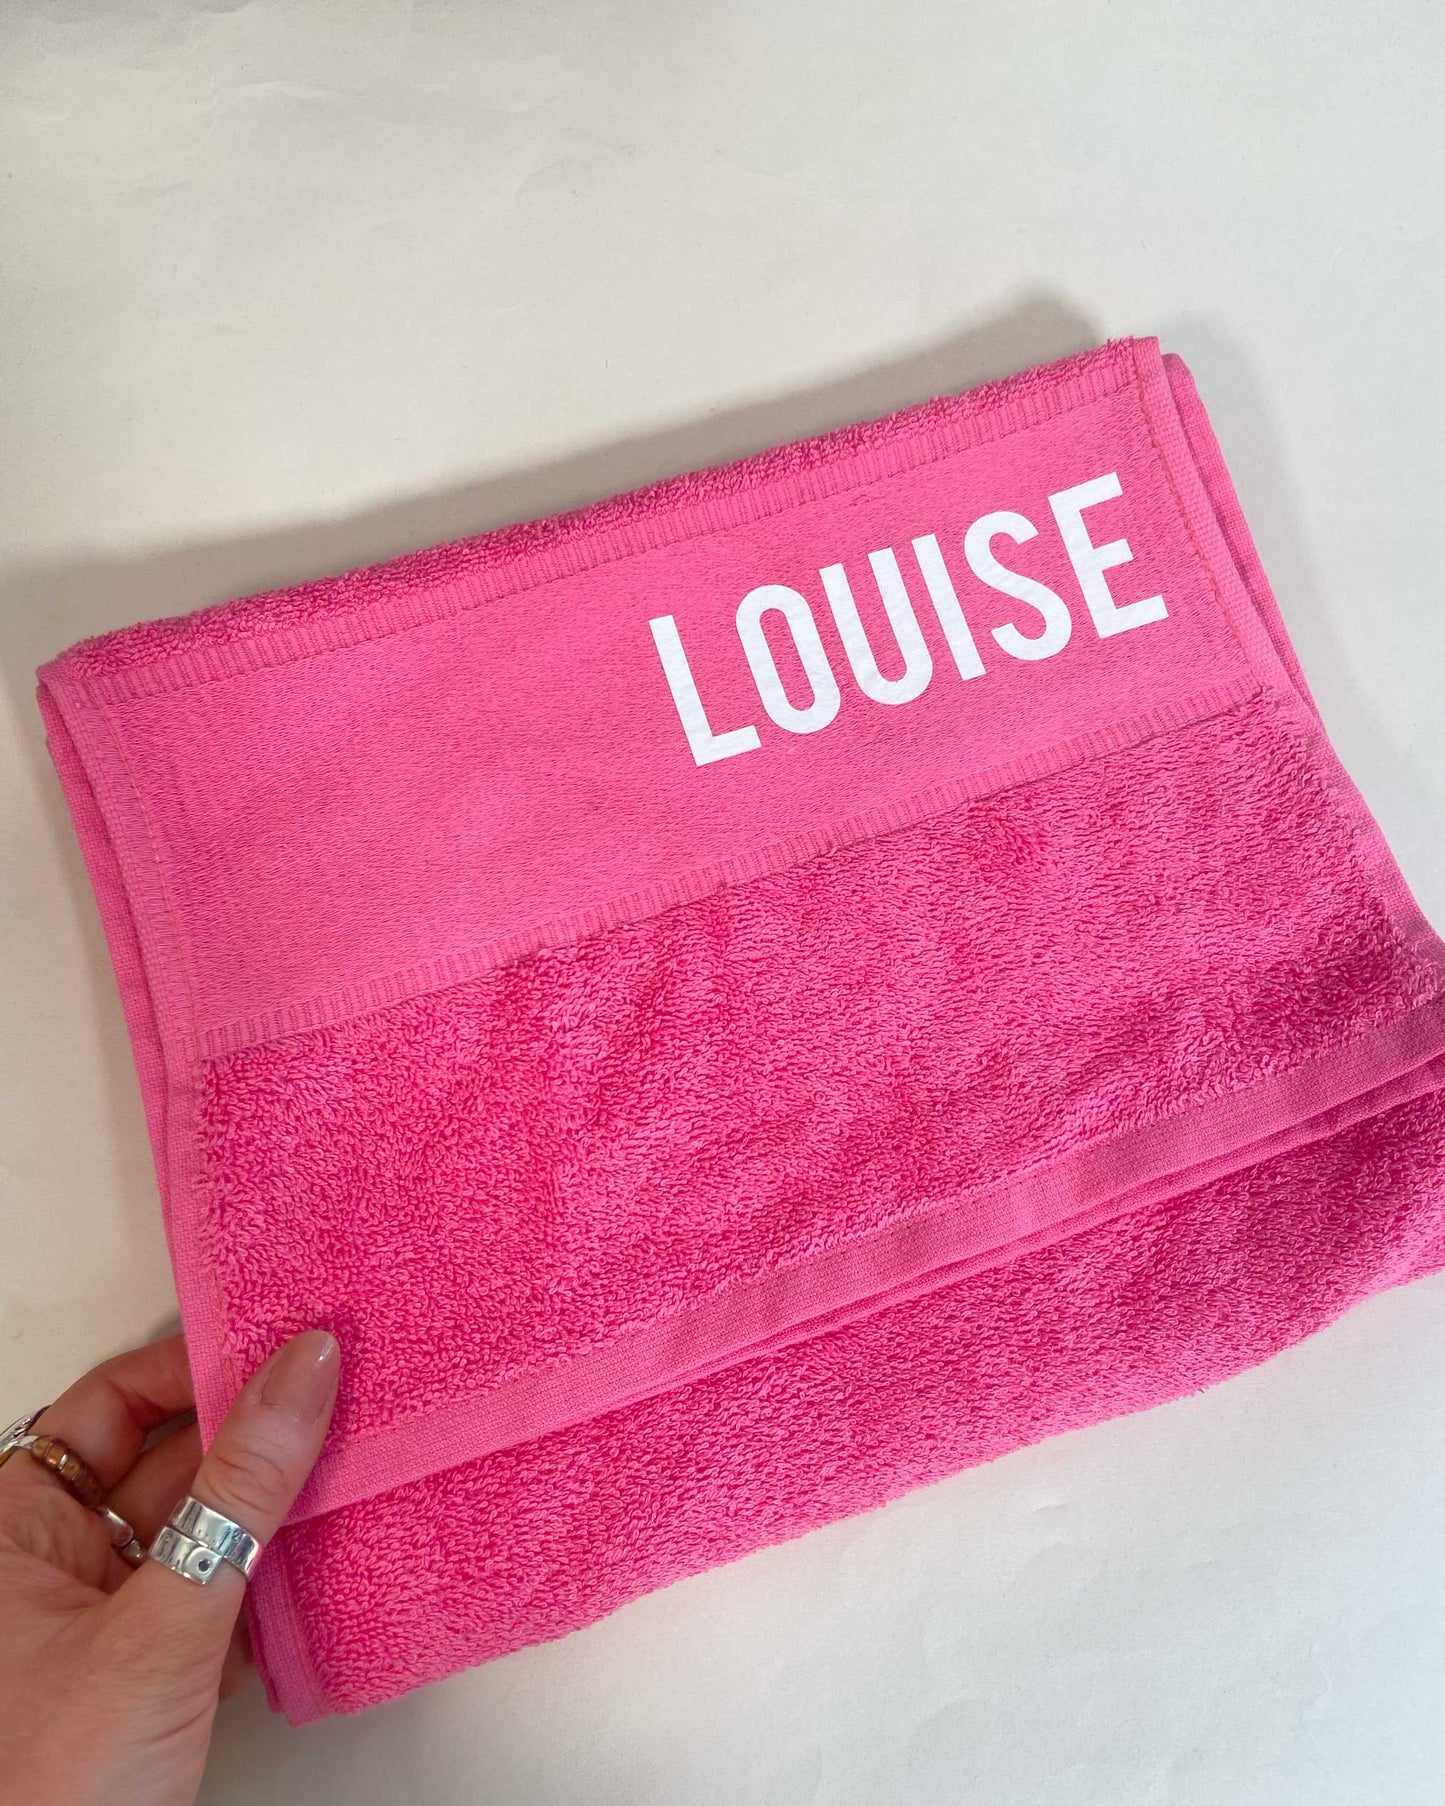 Louise Pink Gym Towel SALE